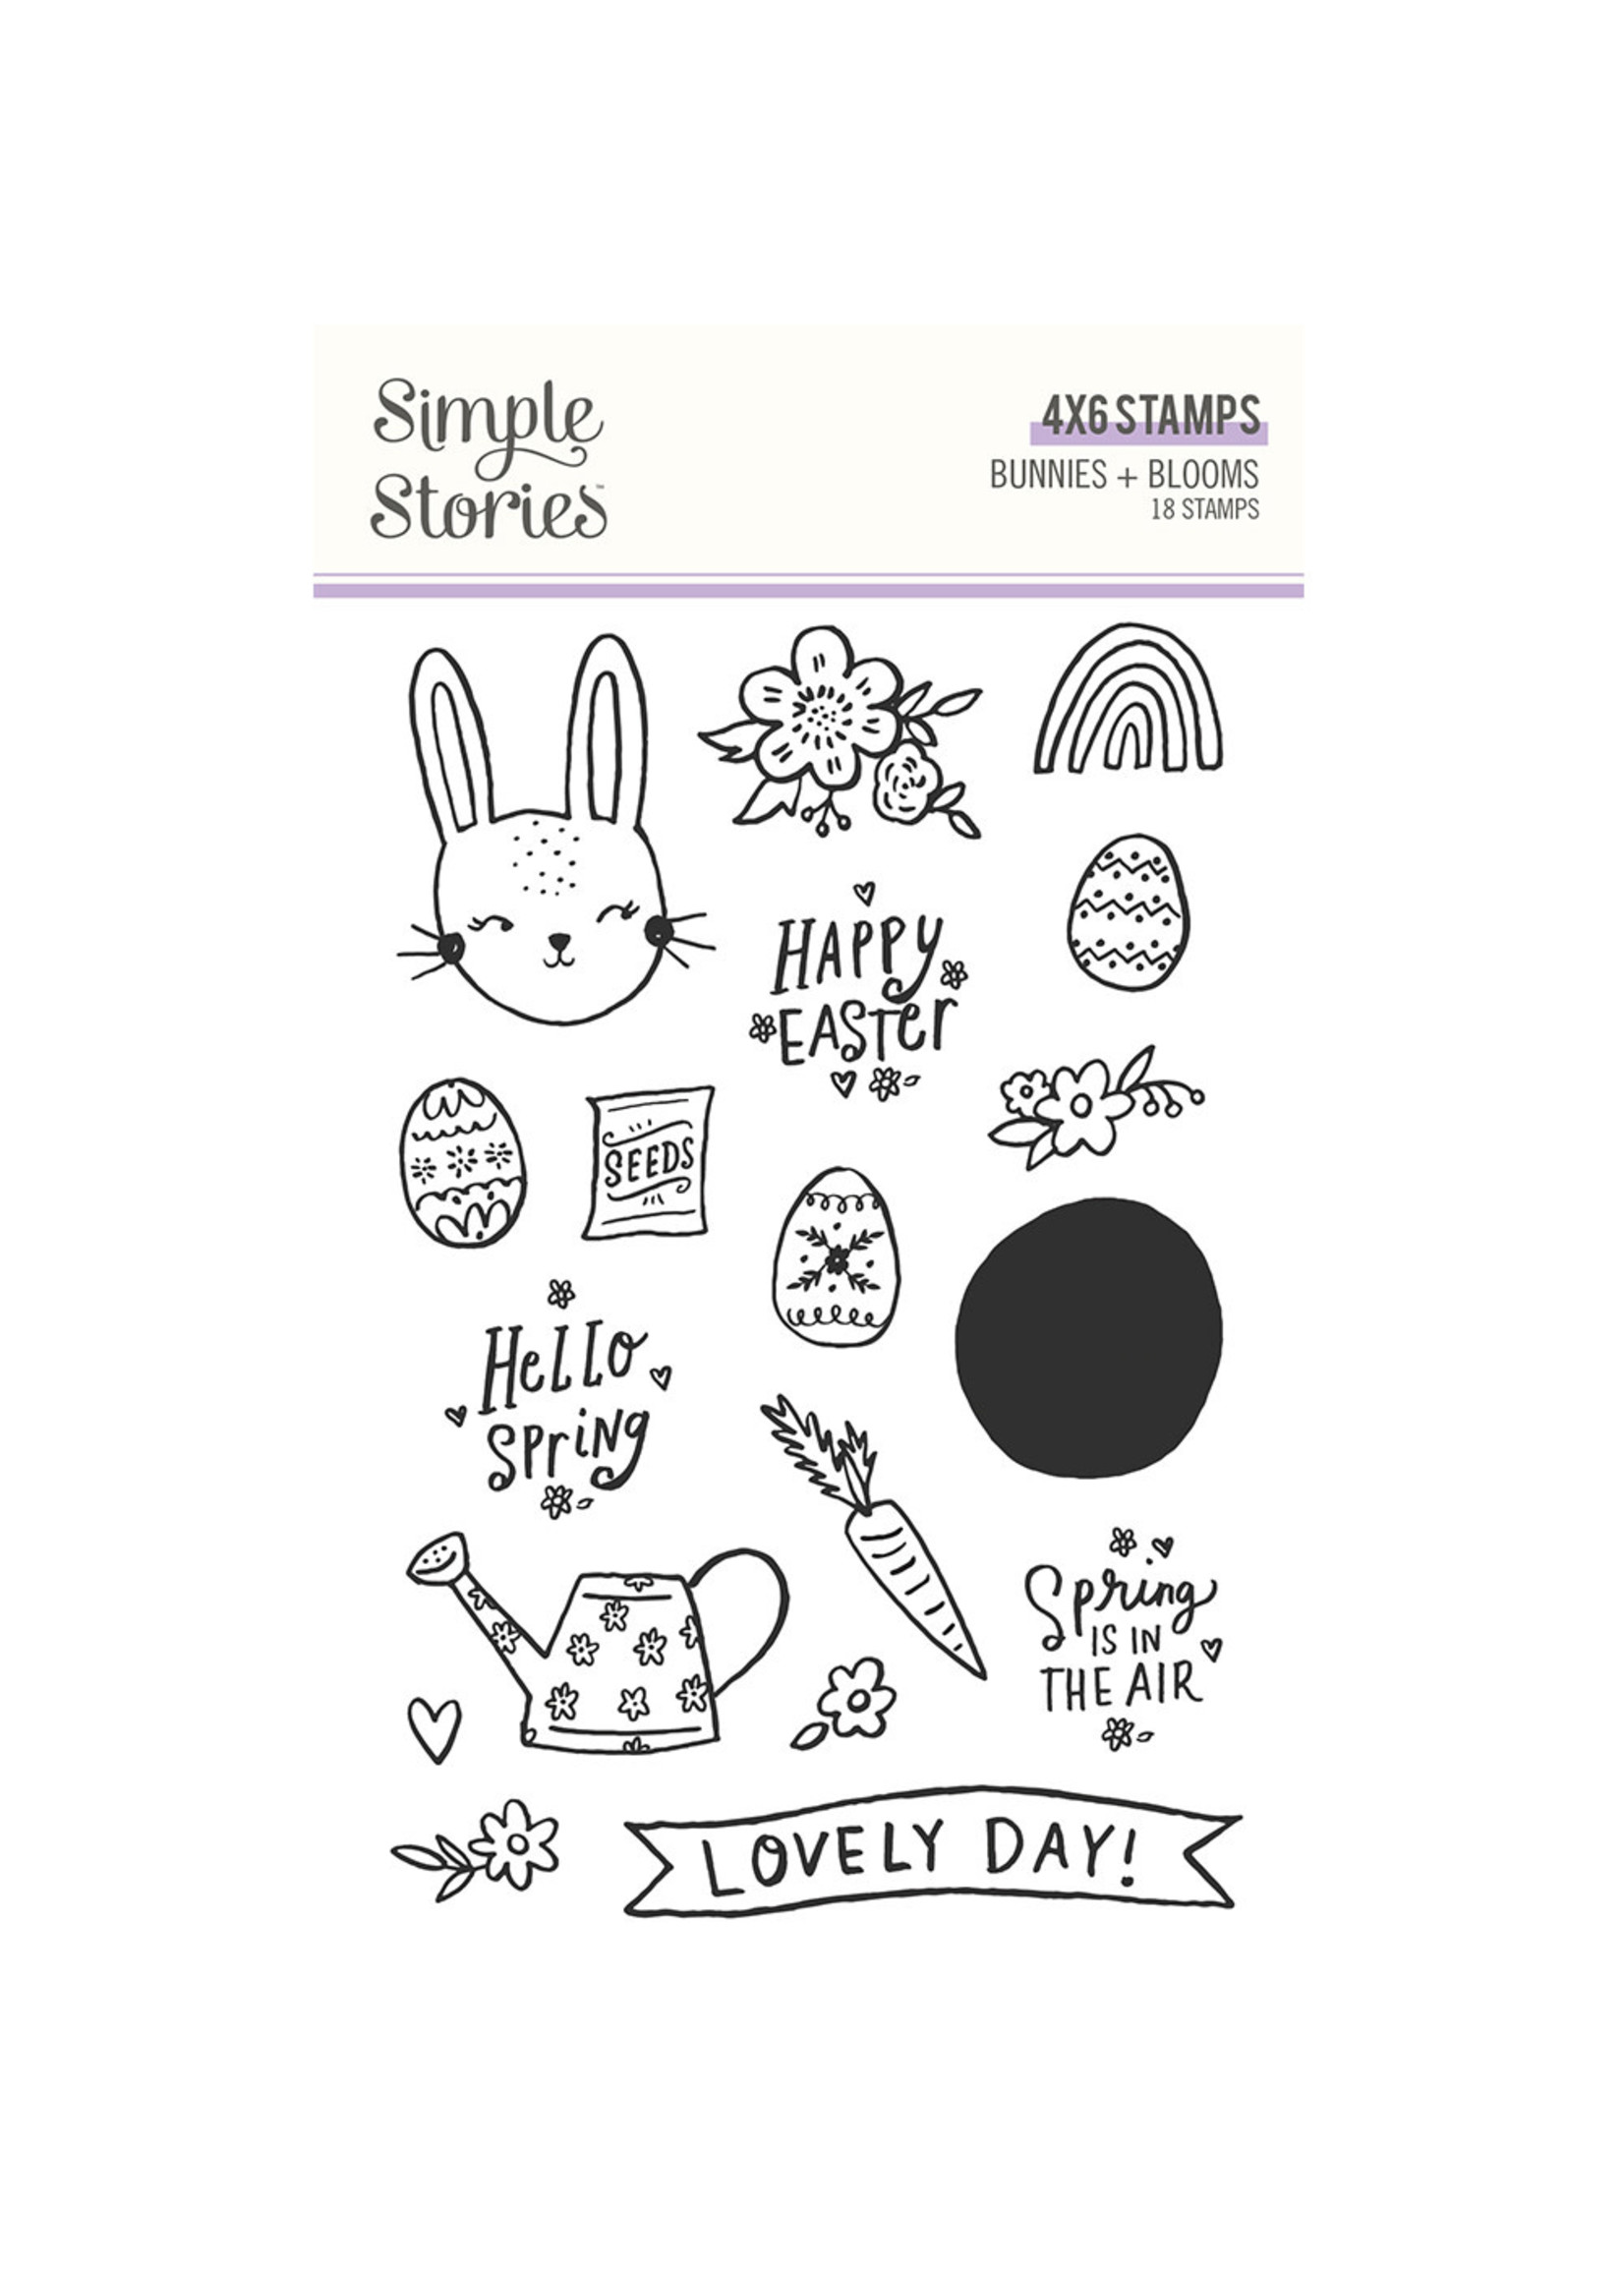 Simple Stories Bunnies + Blooms - Stamps